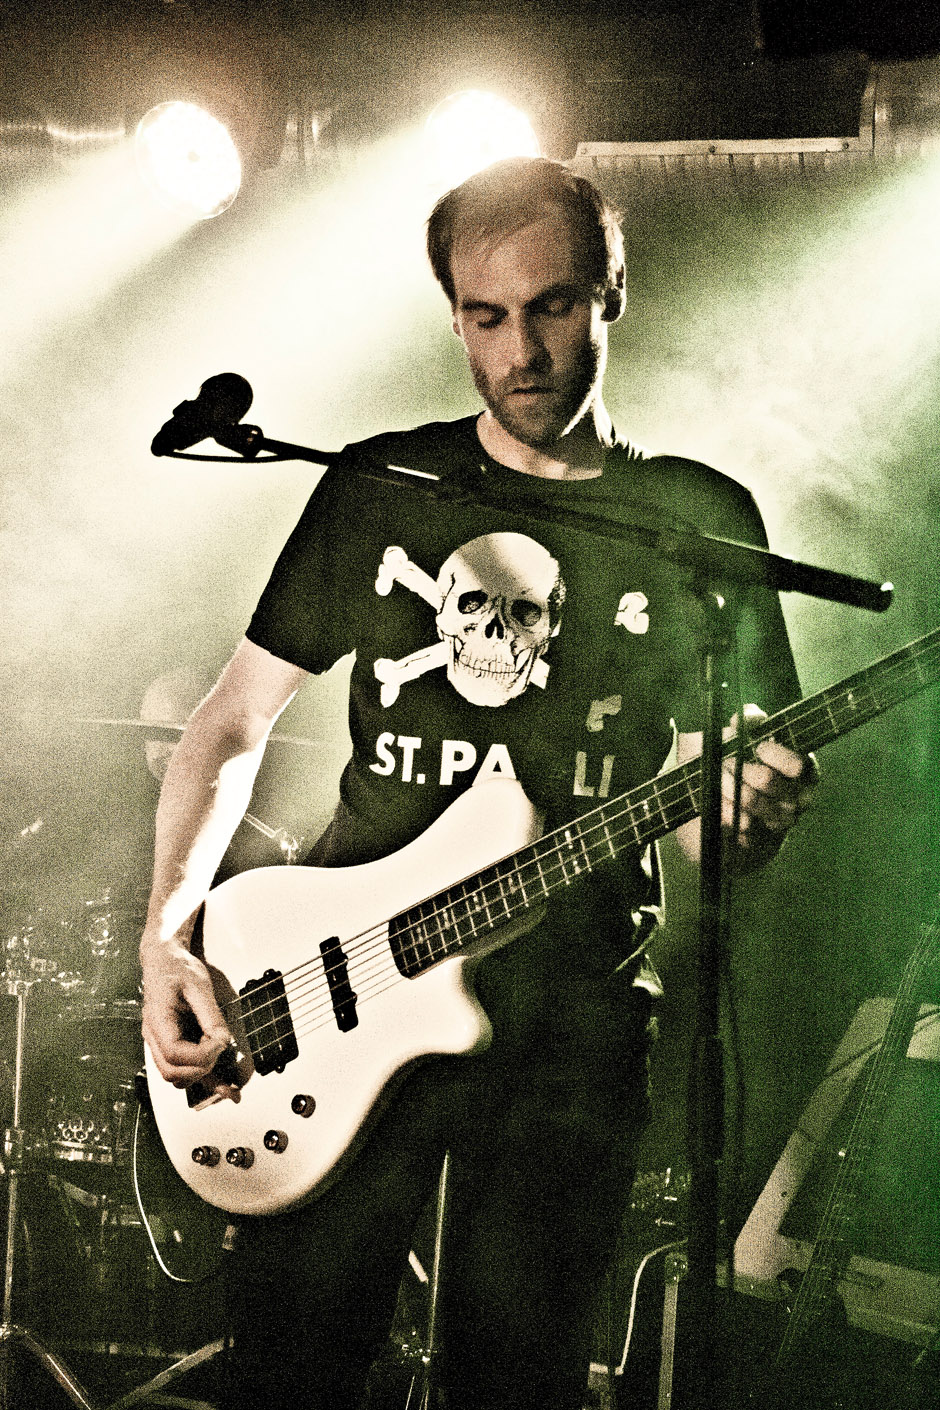 Amplifier live, 16.10.2014, Berlin